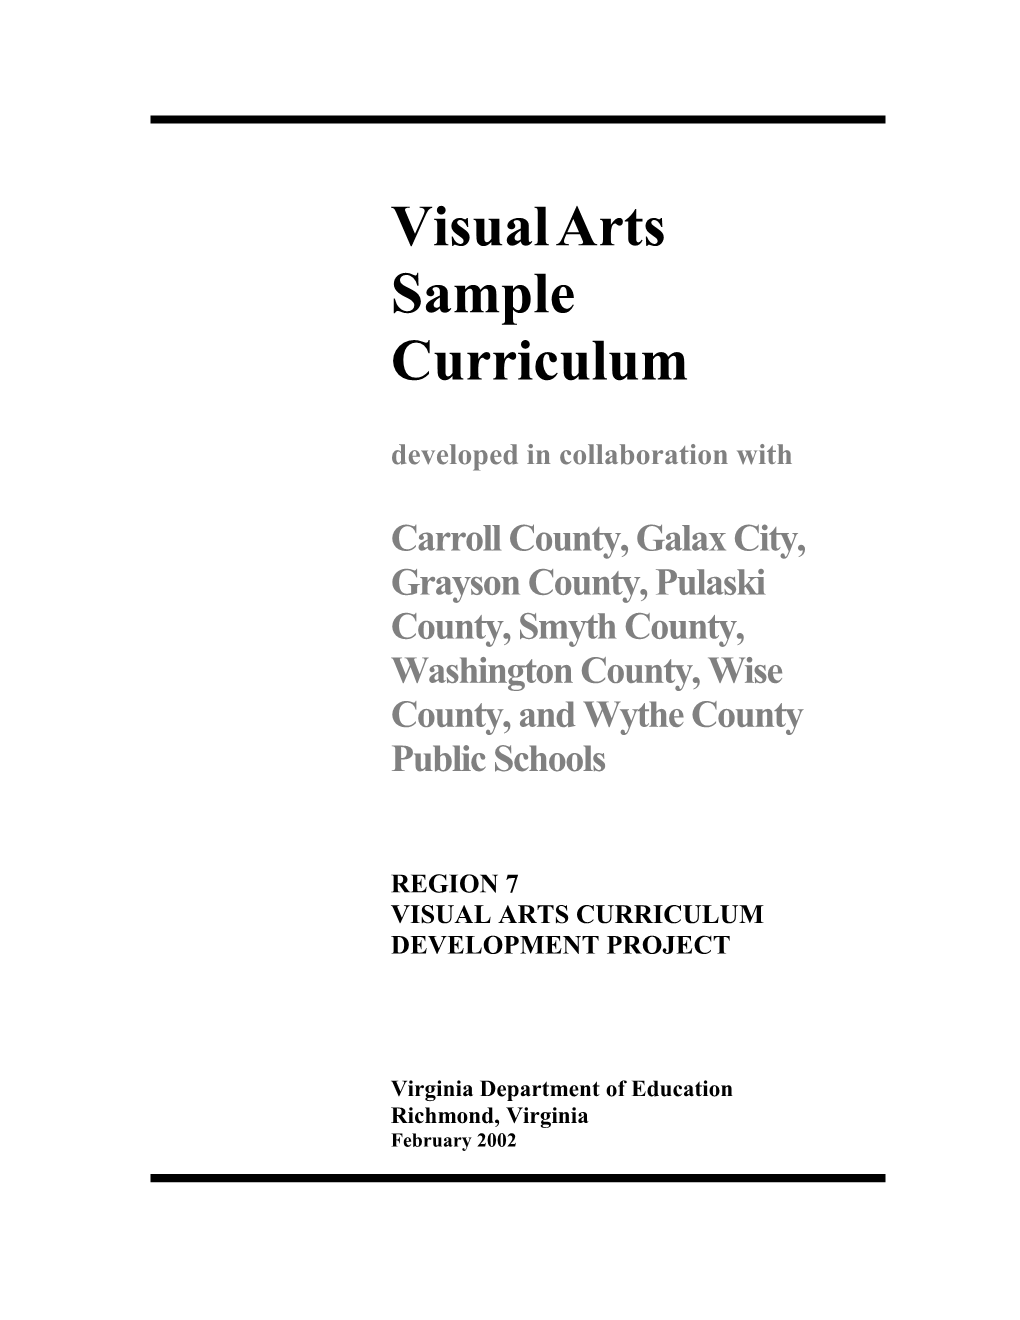 Visual Arts Curriculum Development Project